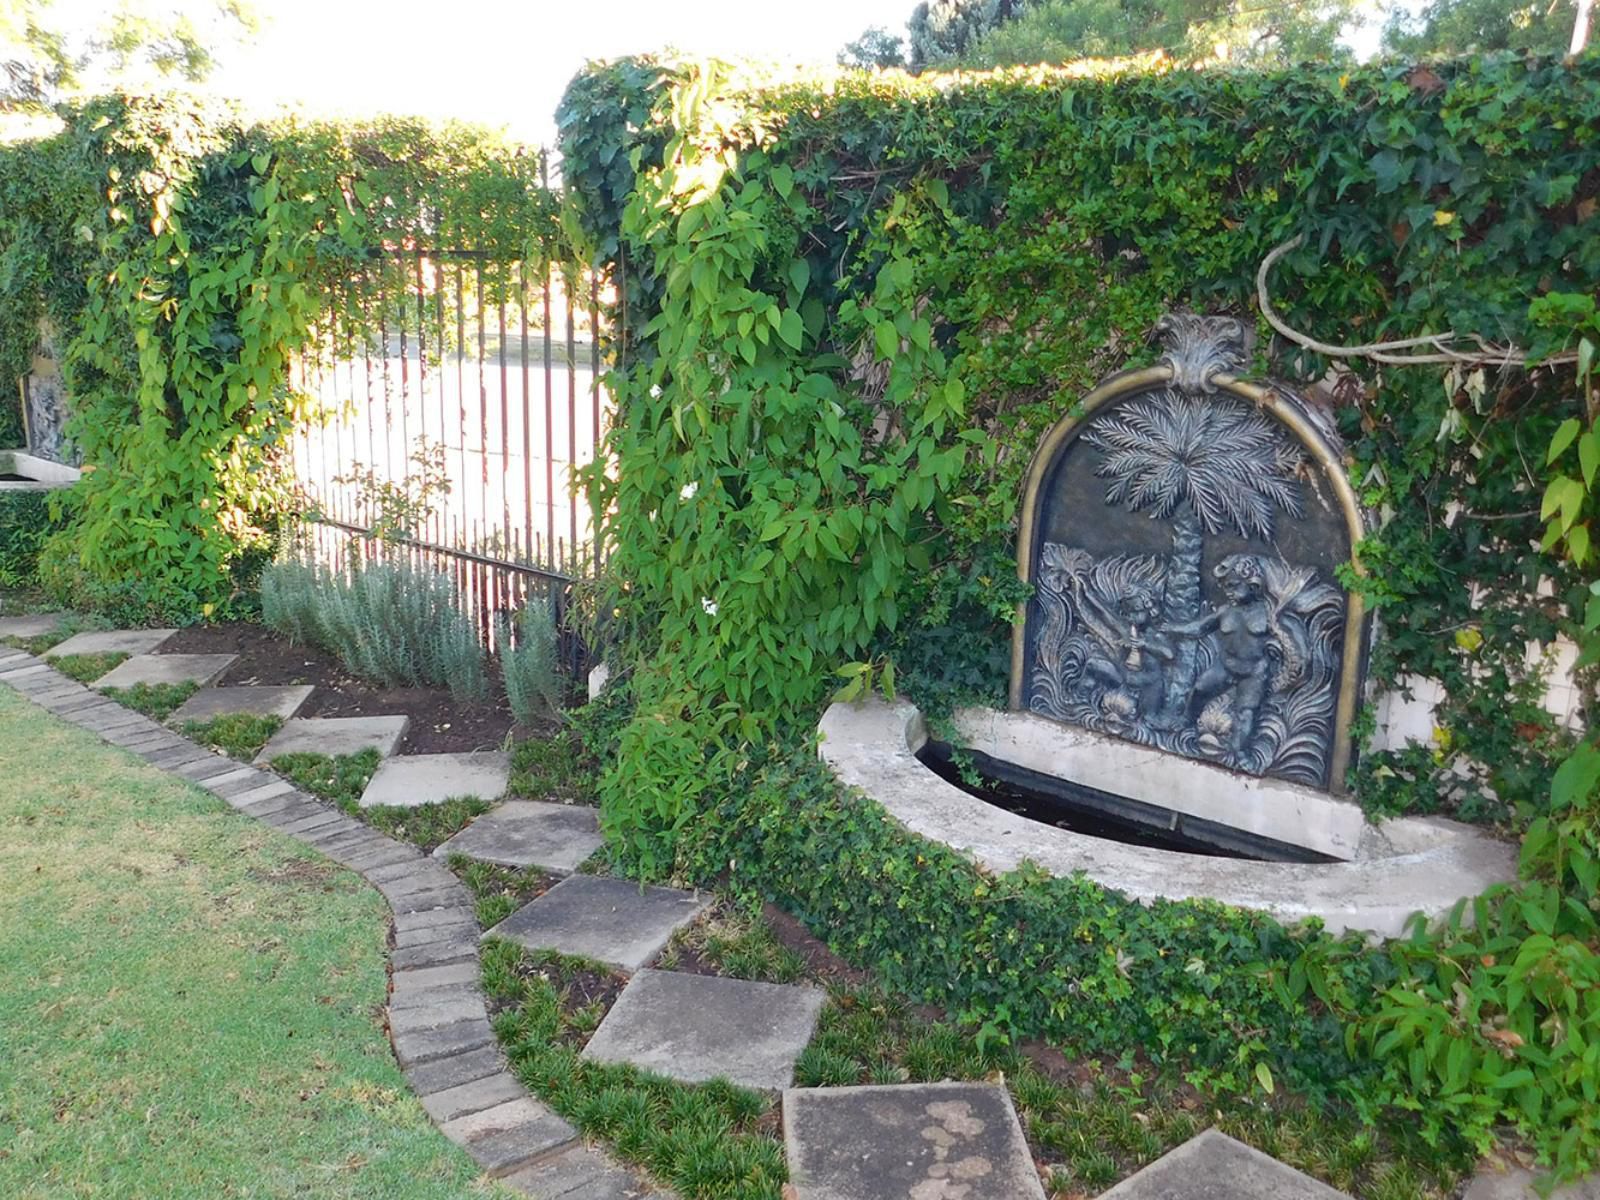 Dankhof Guest House Lydenburg Mpumalanga South Africa Plant, Nature, Garden